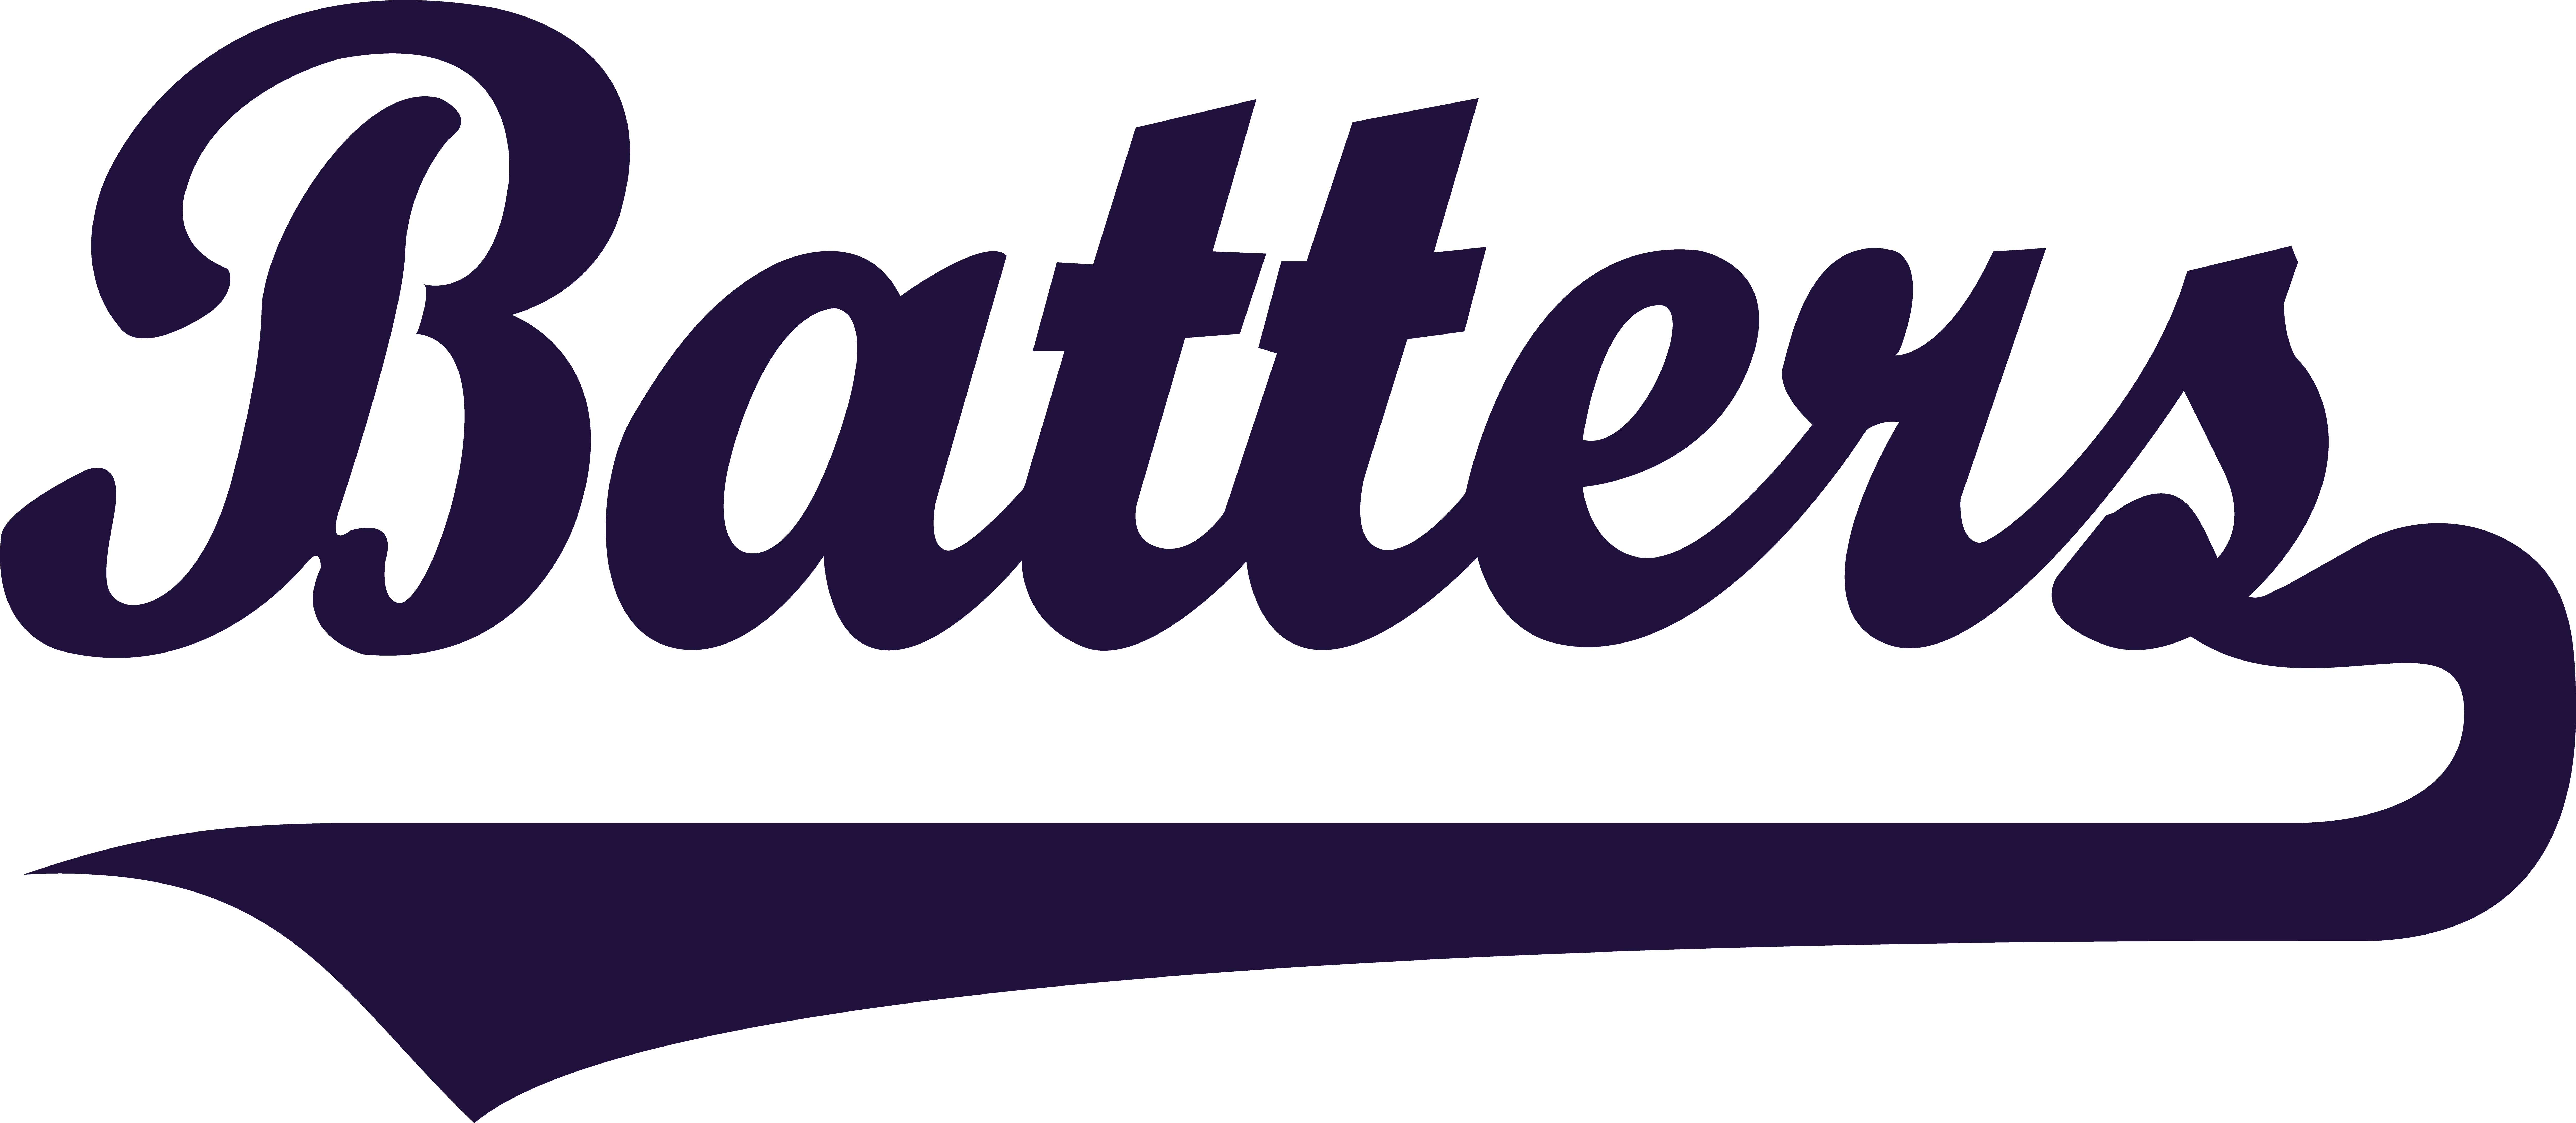 2024 logo